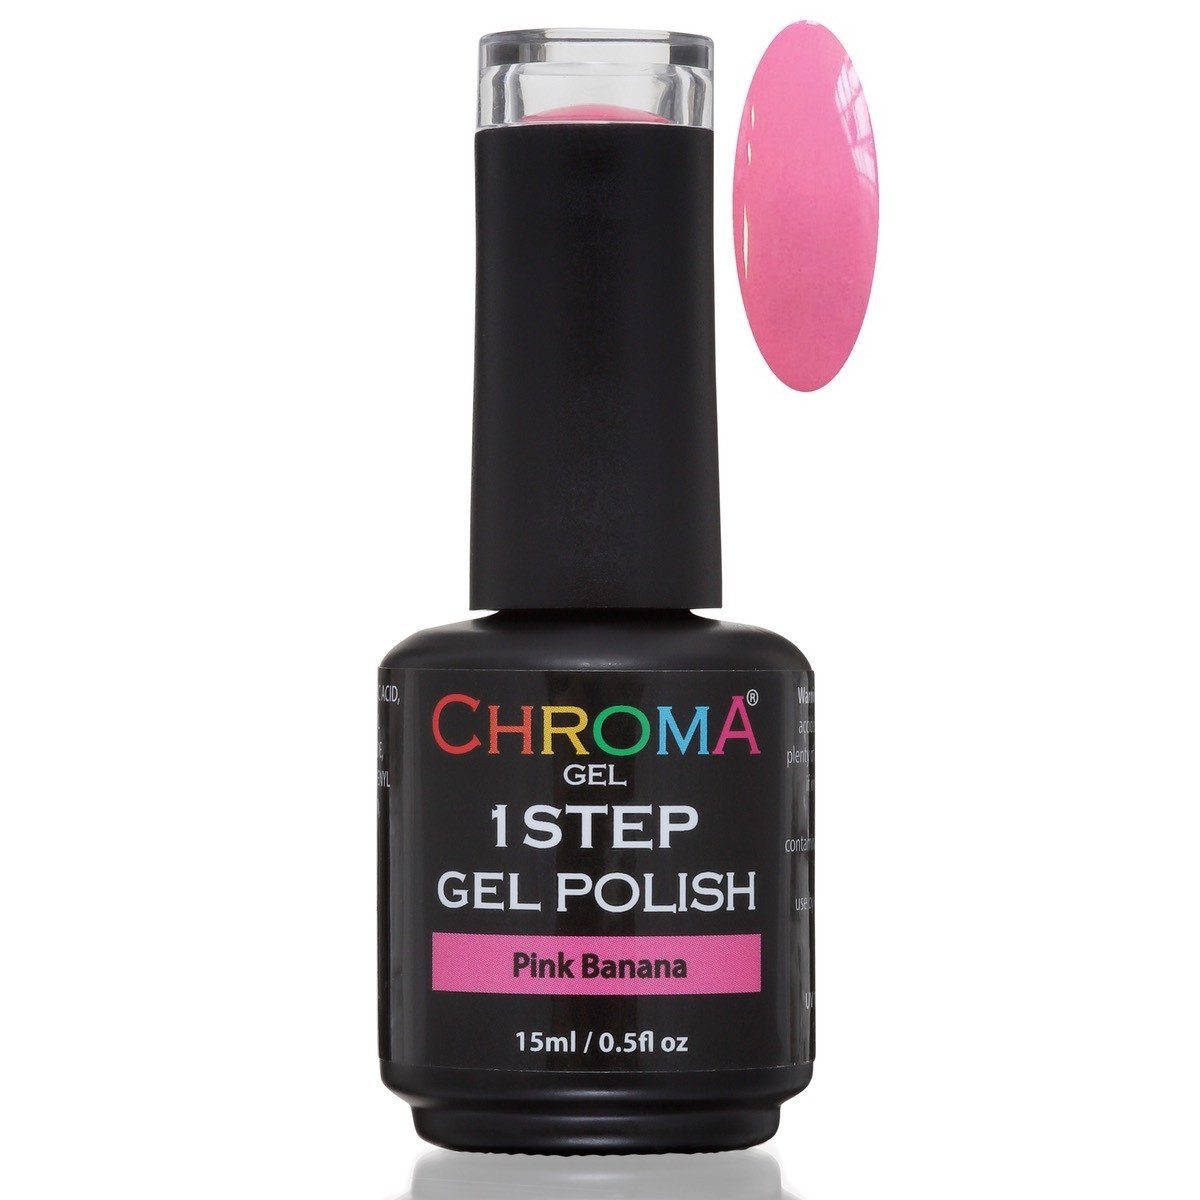 Chroma Gel 1 Step Gel Polish Pink Banana No.36 - Beauty Hair Products LtdChroma Gel